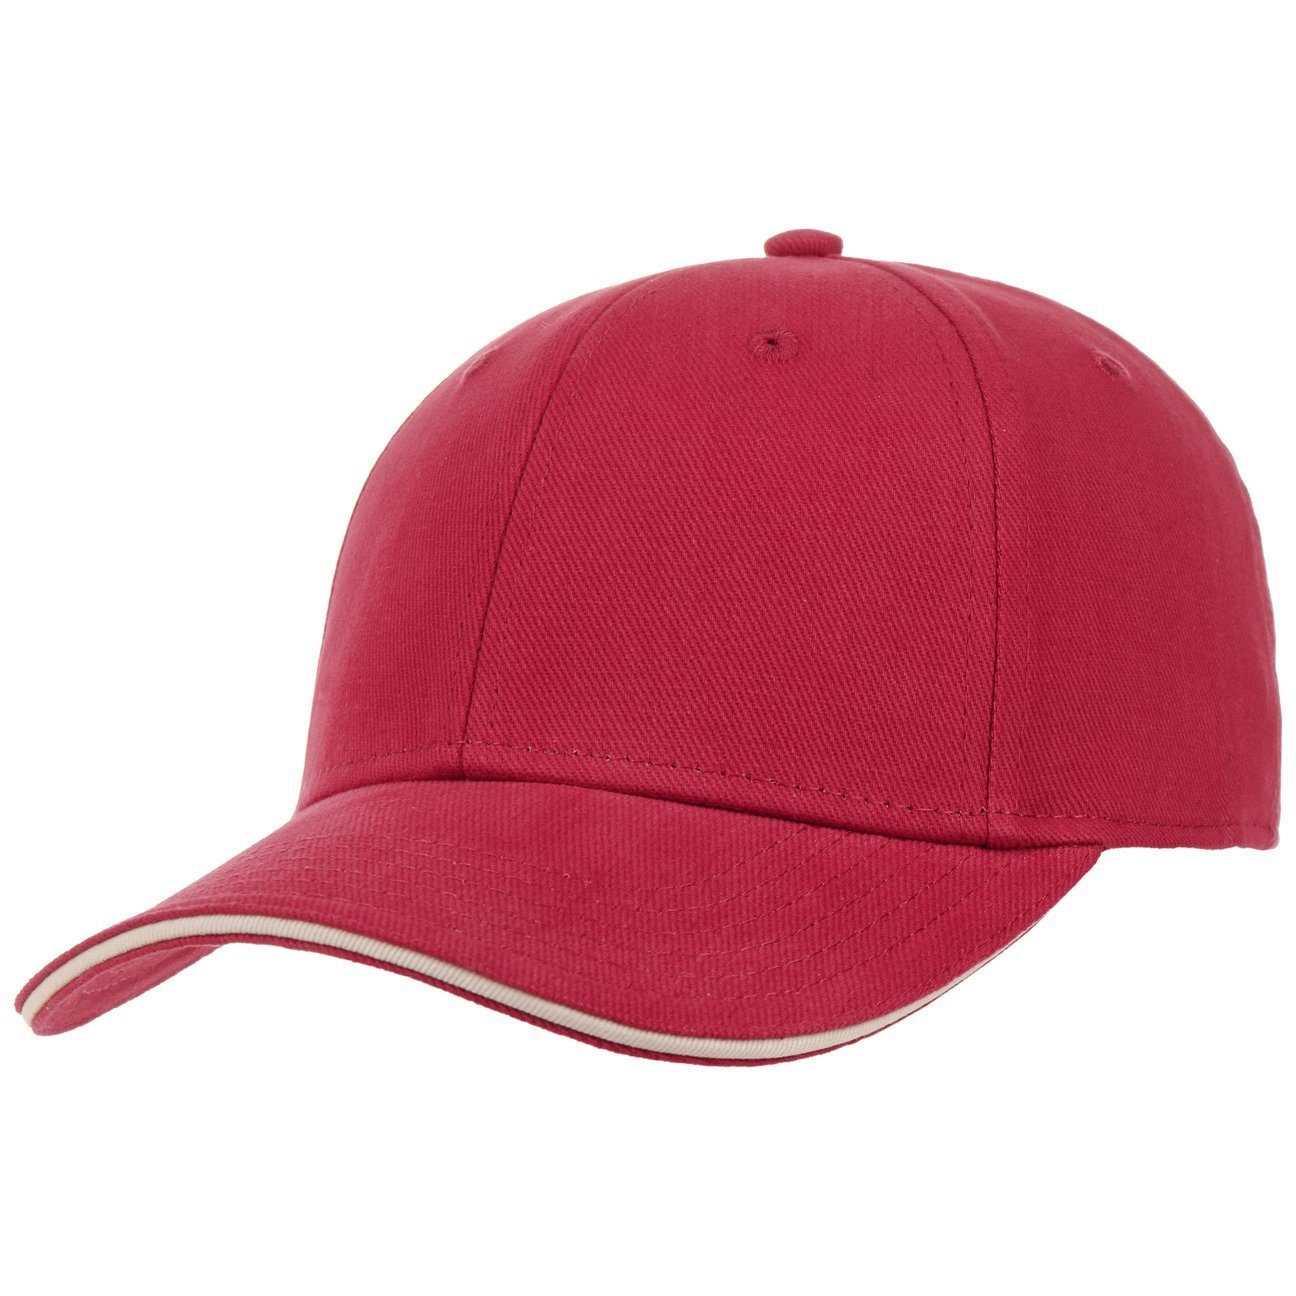 Rote Baseballcaps online kaufen » Rote Basecaps | OTTO | Baseball Caps